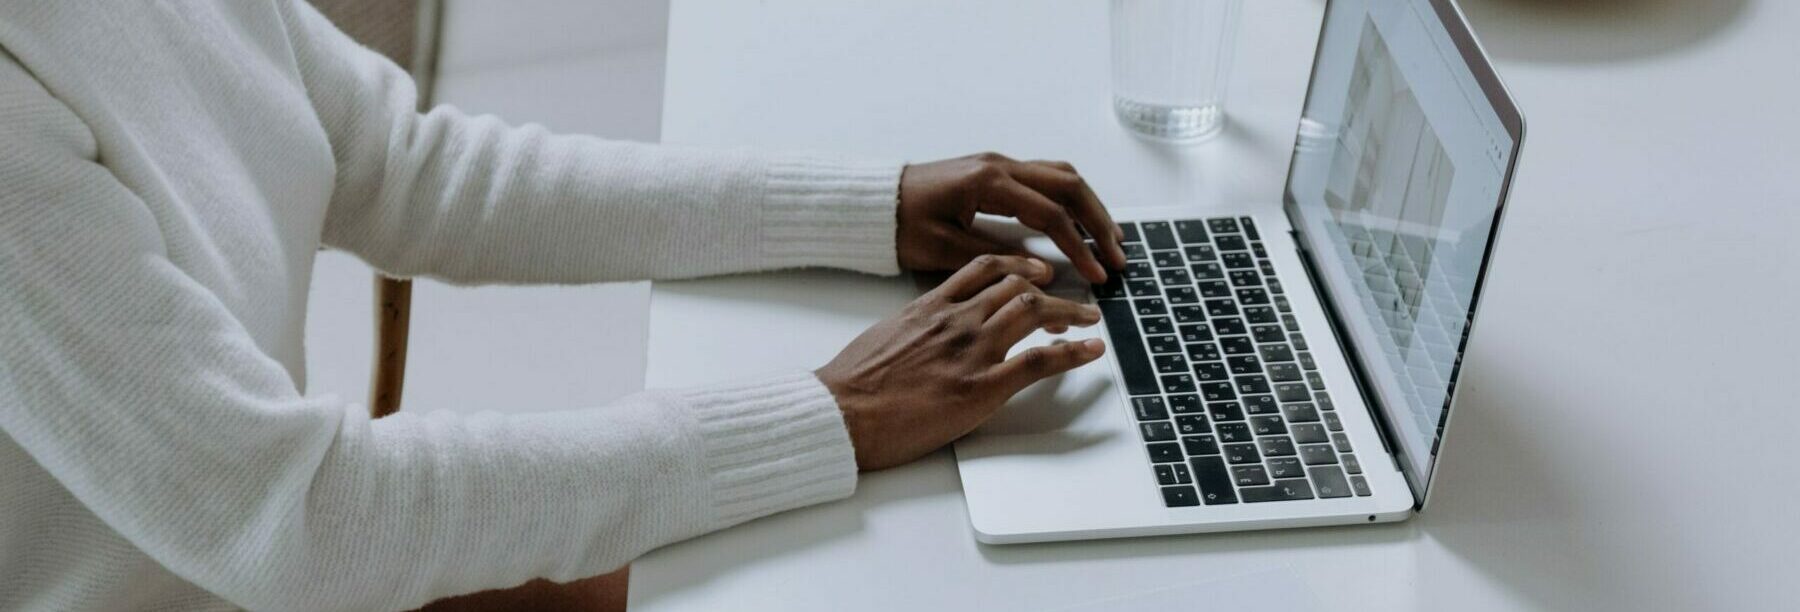 Black woman typing on a laptop